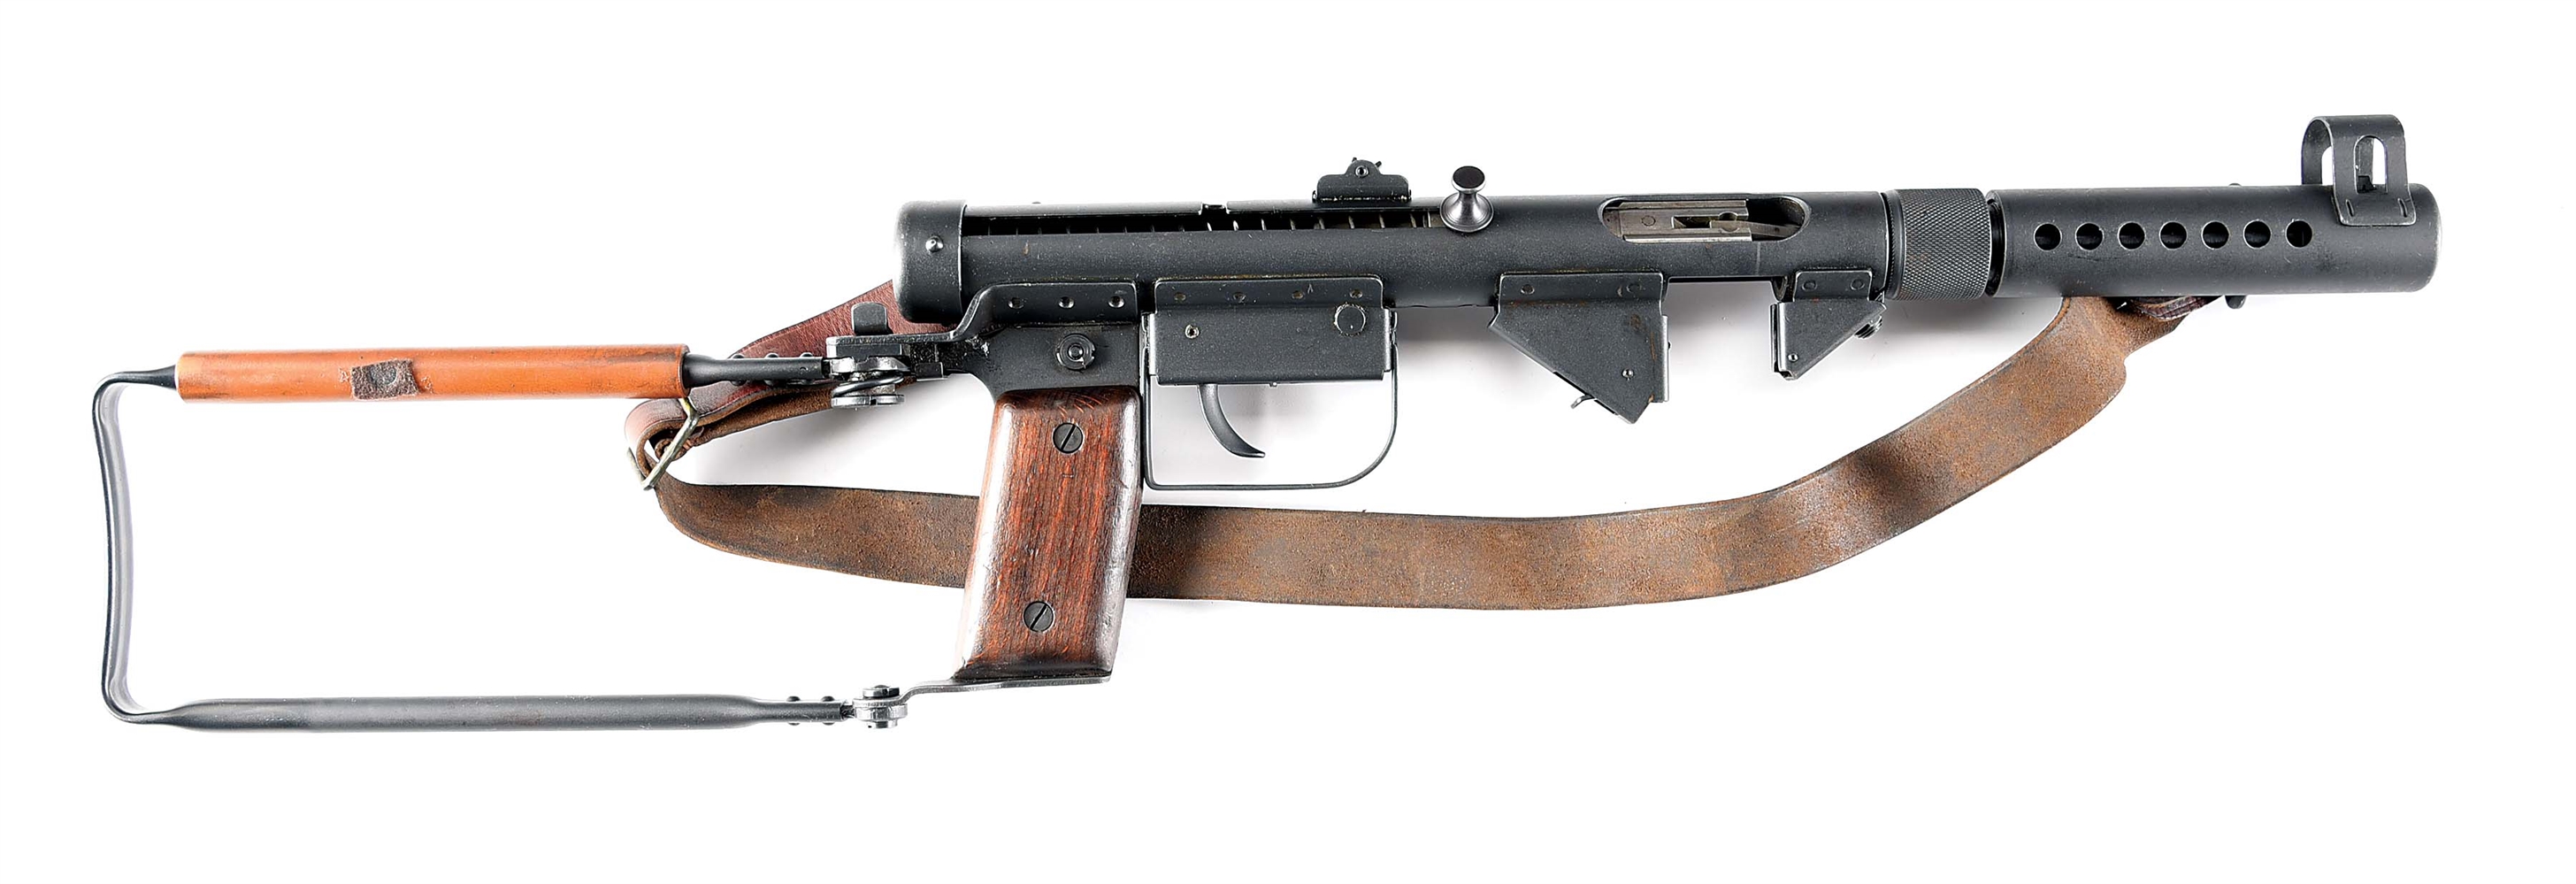 (N) DANISH HOVEA M/49 SUBMACHINE GUN (CURIO & RELIC).